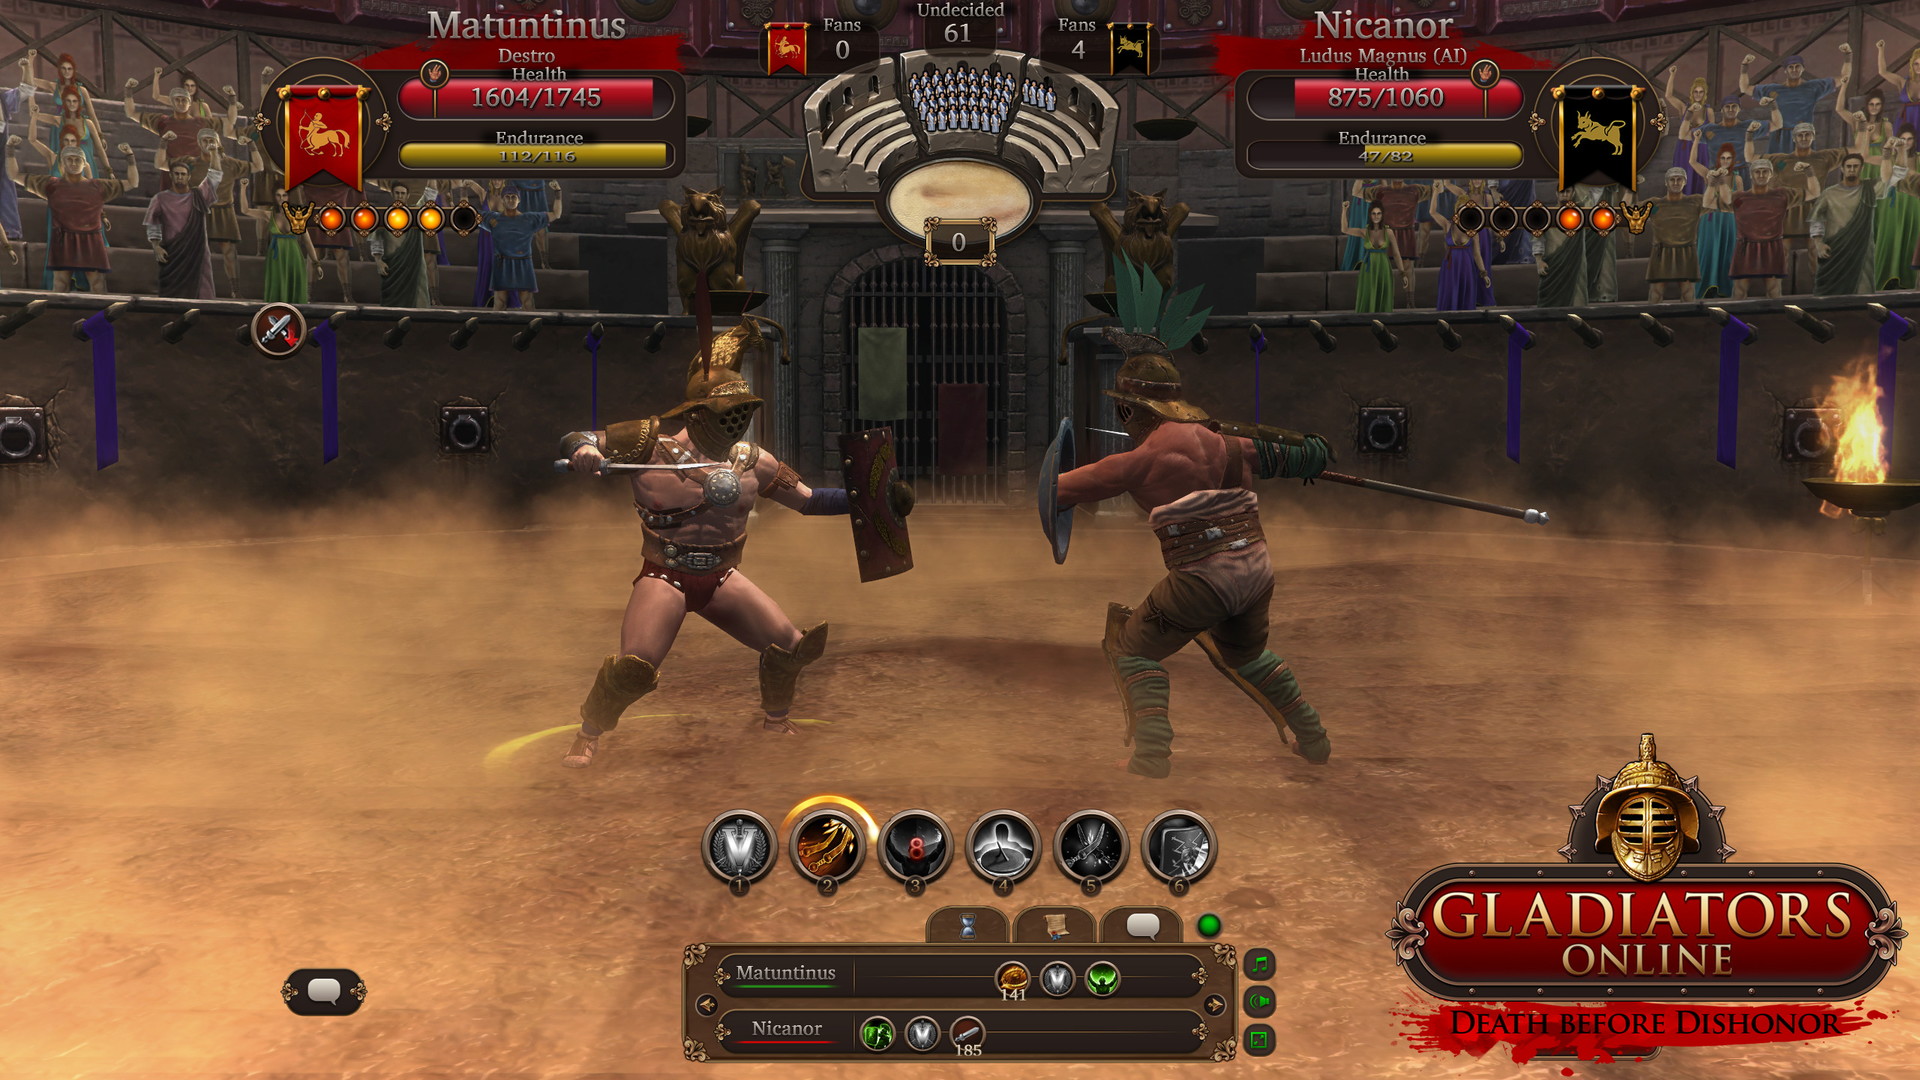 Gladiators Online: Death Before Dishonor - screenshot 14